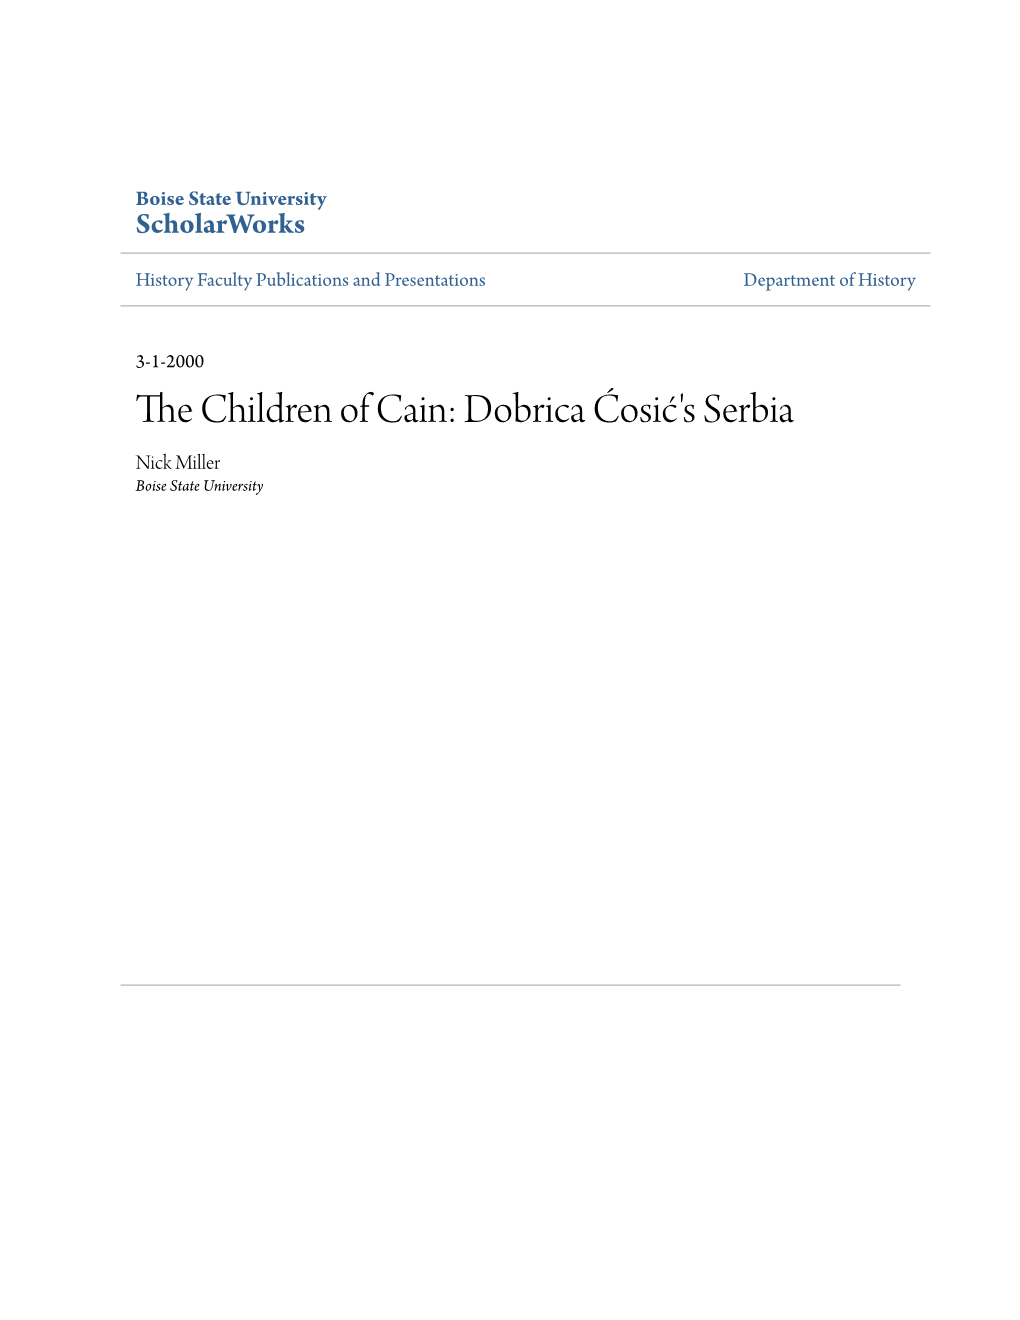 Dobrica Ćosić's Serbia Nick Miller Boise State University EDITOR East European Politics and Societies '